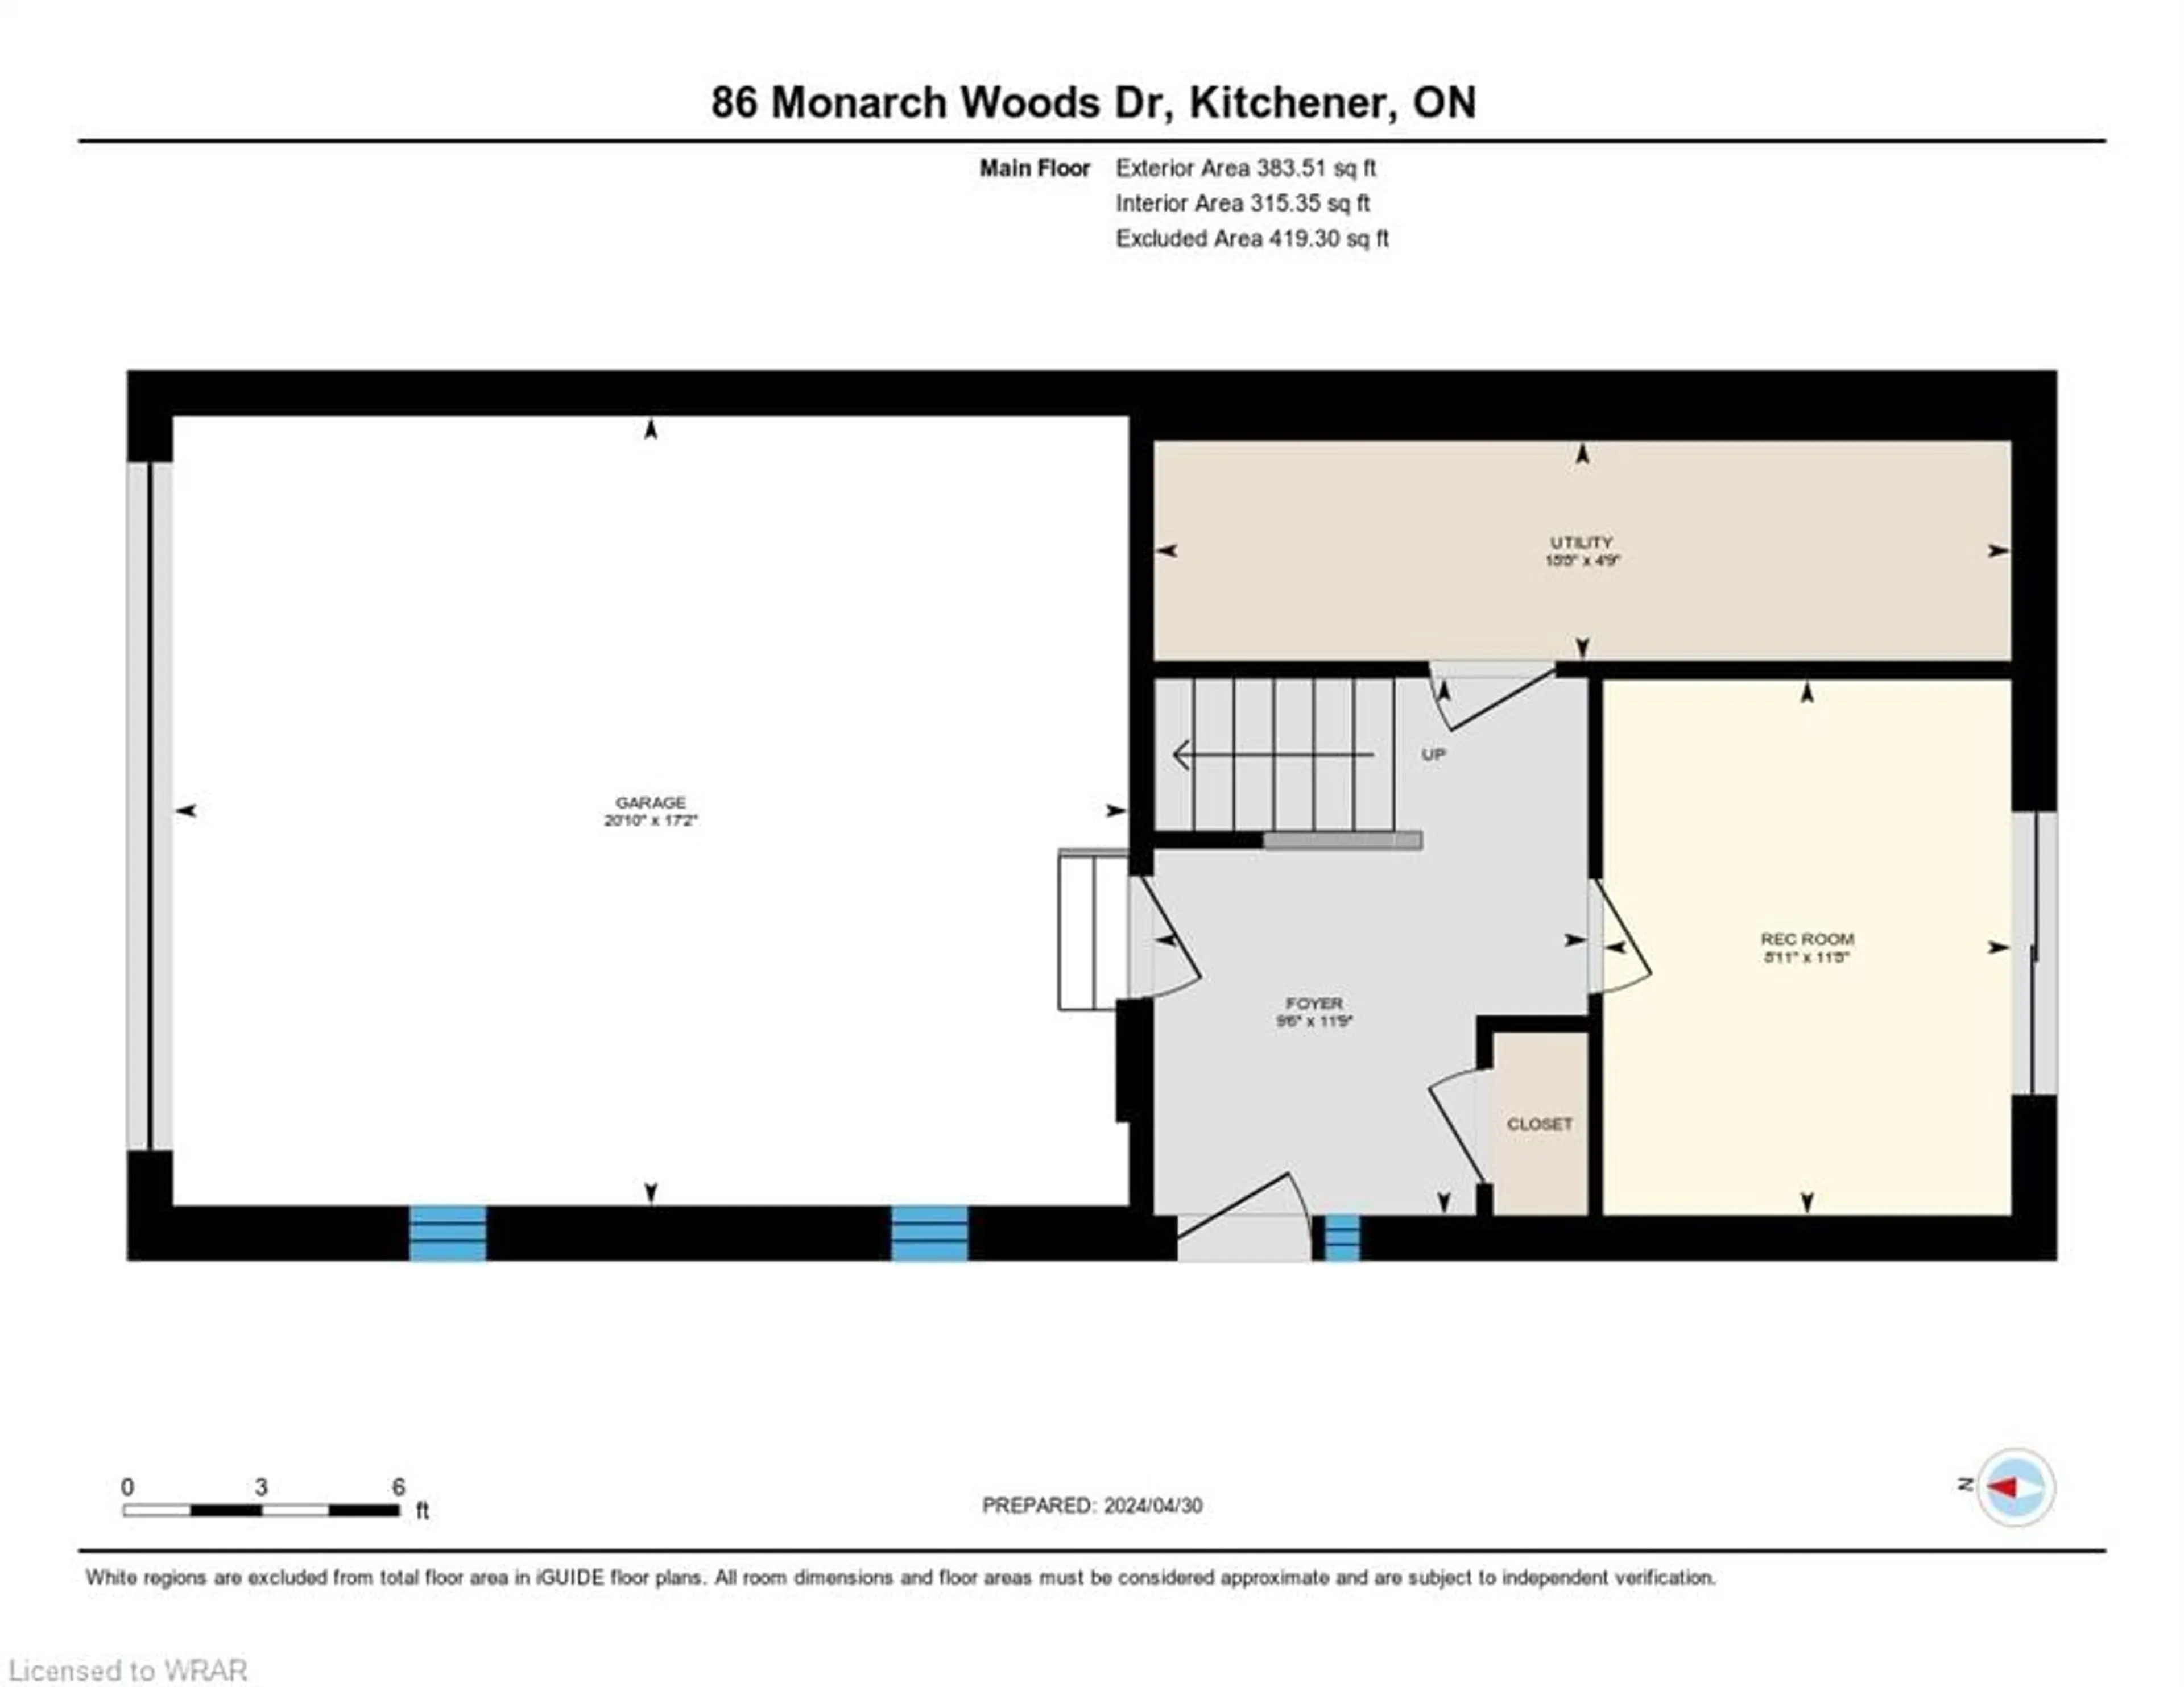 Floor plan for 86 Monarch Woods Drive Dr, Kitchener Ontario N2P 2Y9